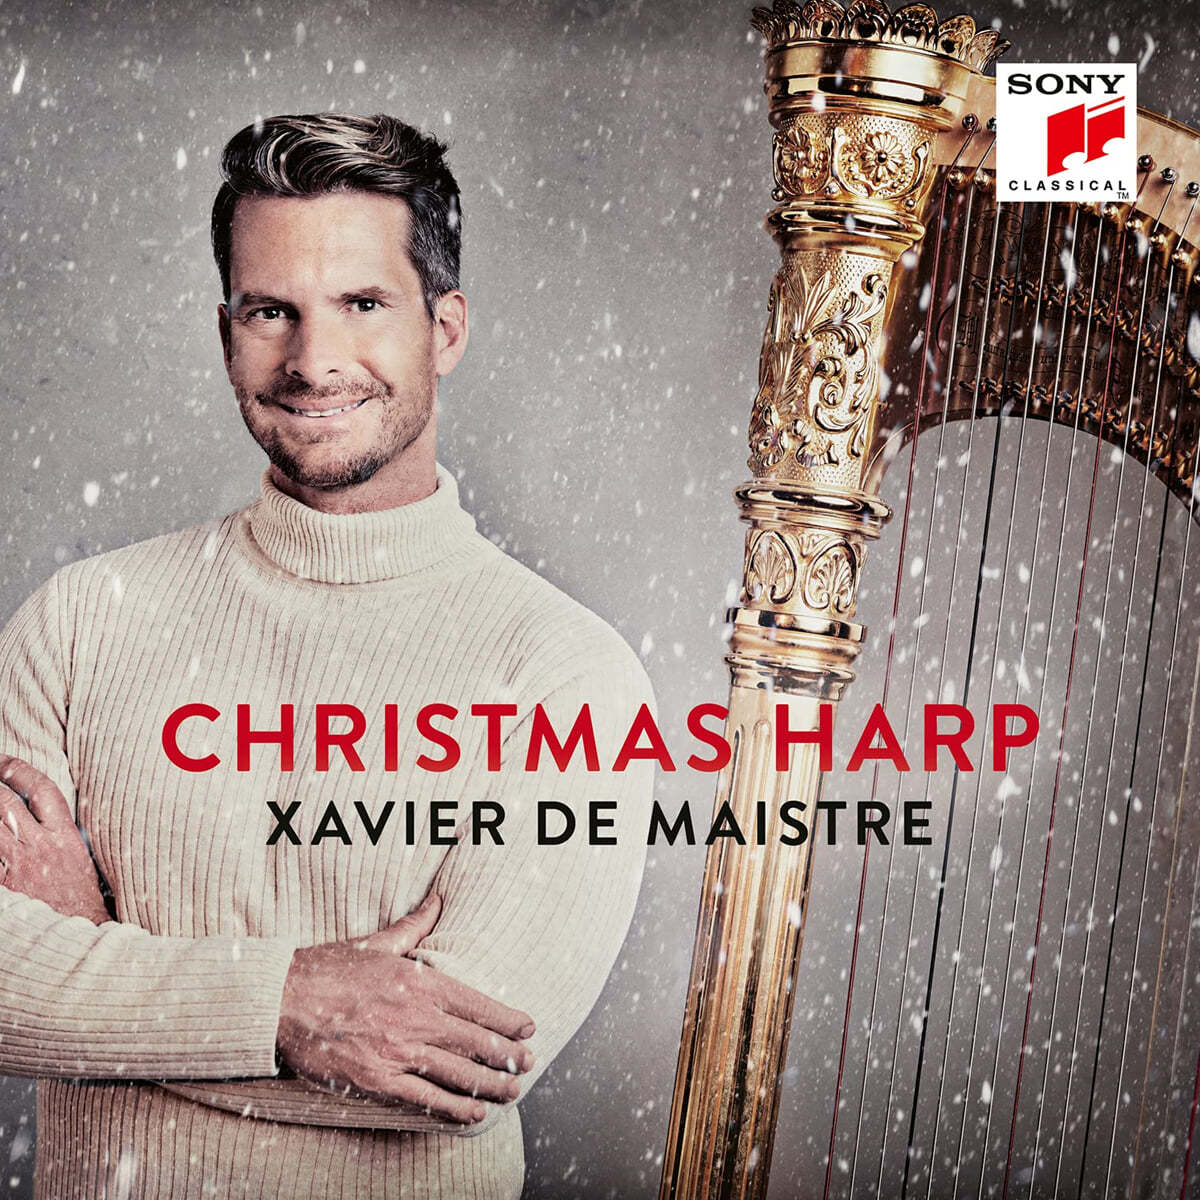 Xavier de Maistre 하프로 연주하는 크리스마스 음악 - 자비에르 드 메스트르 (Christmas Harp)